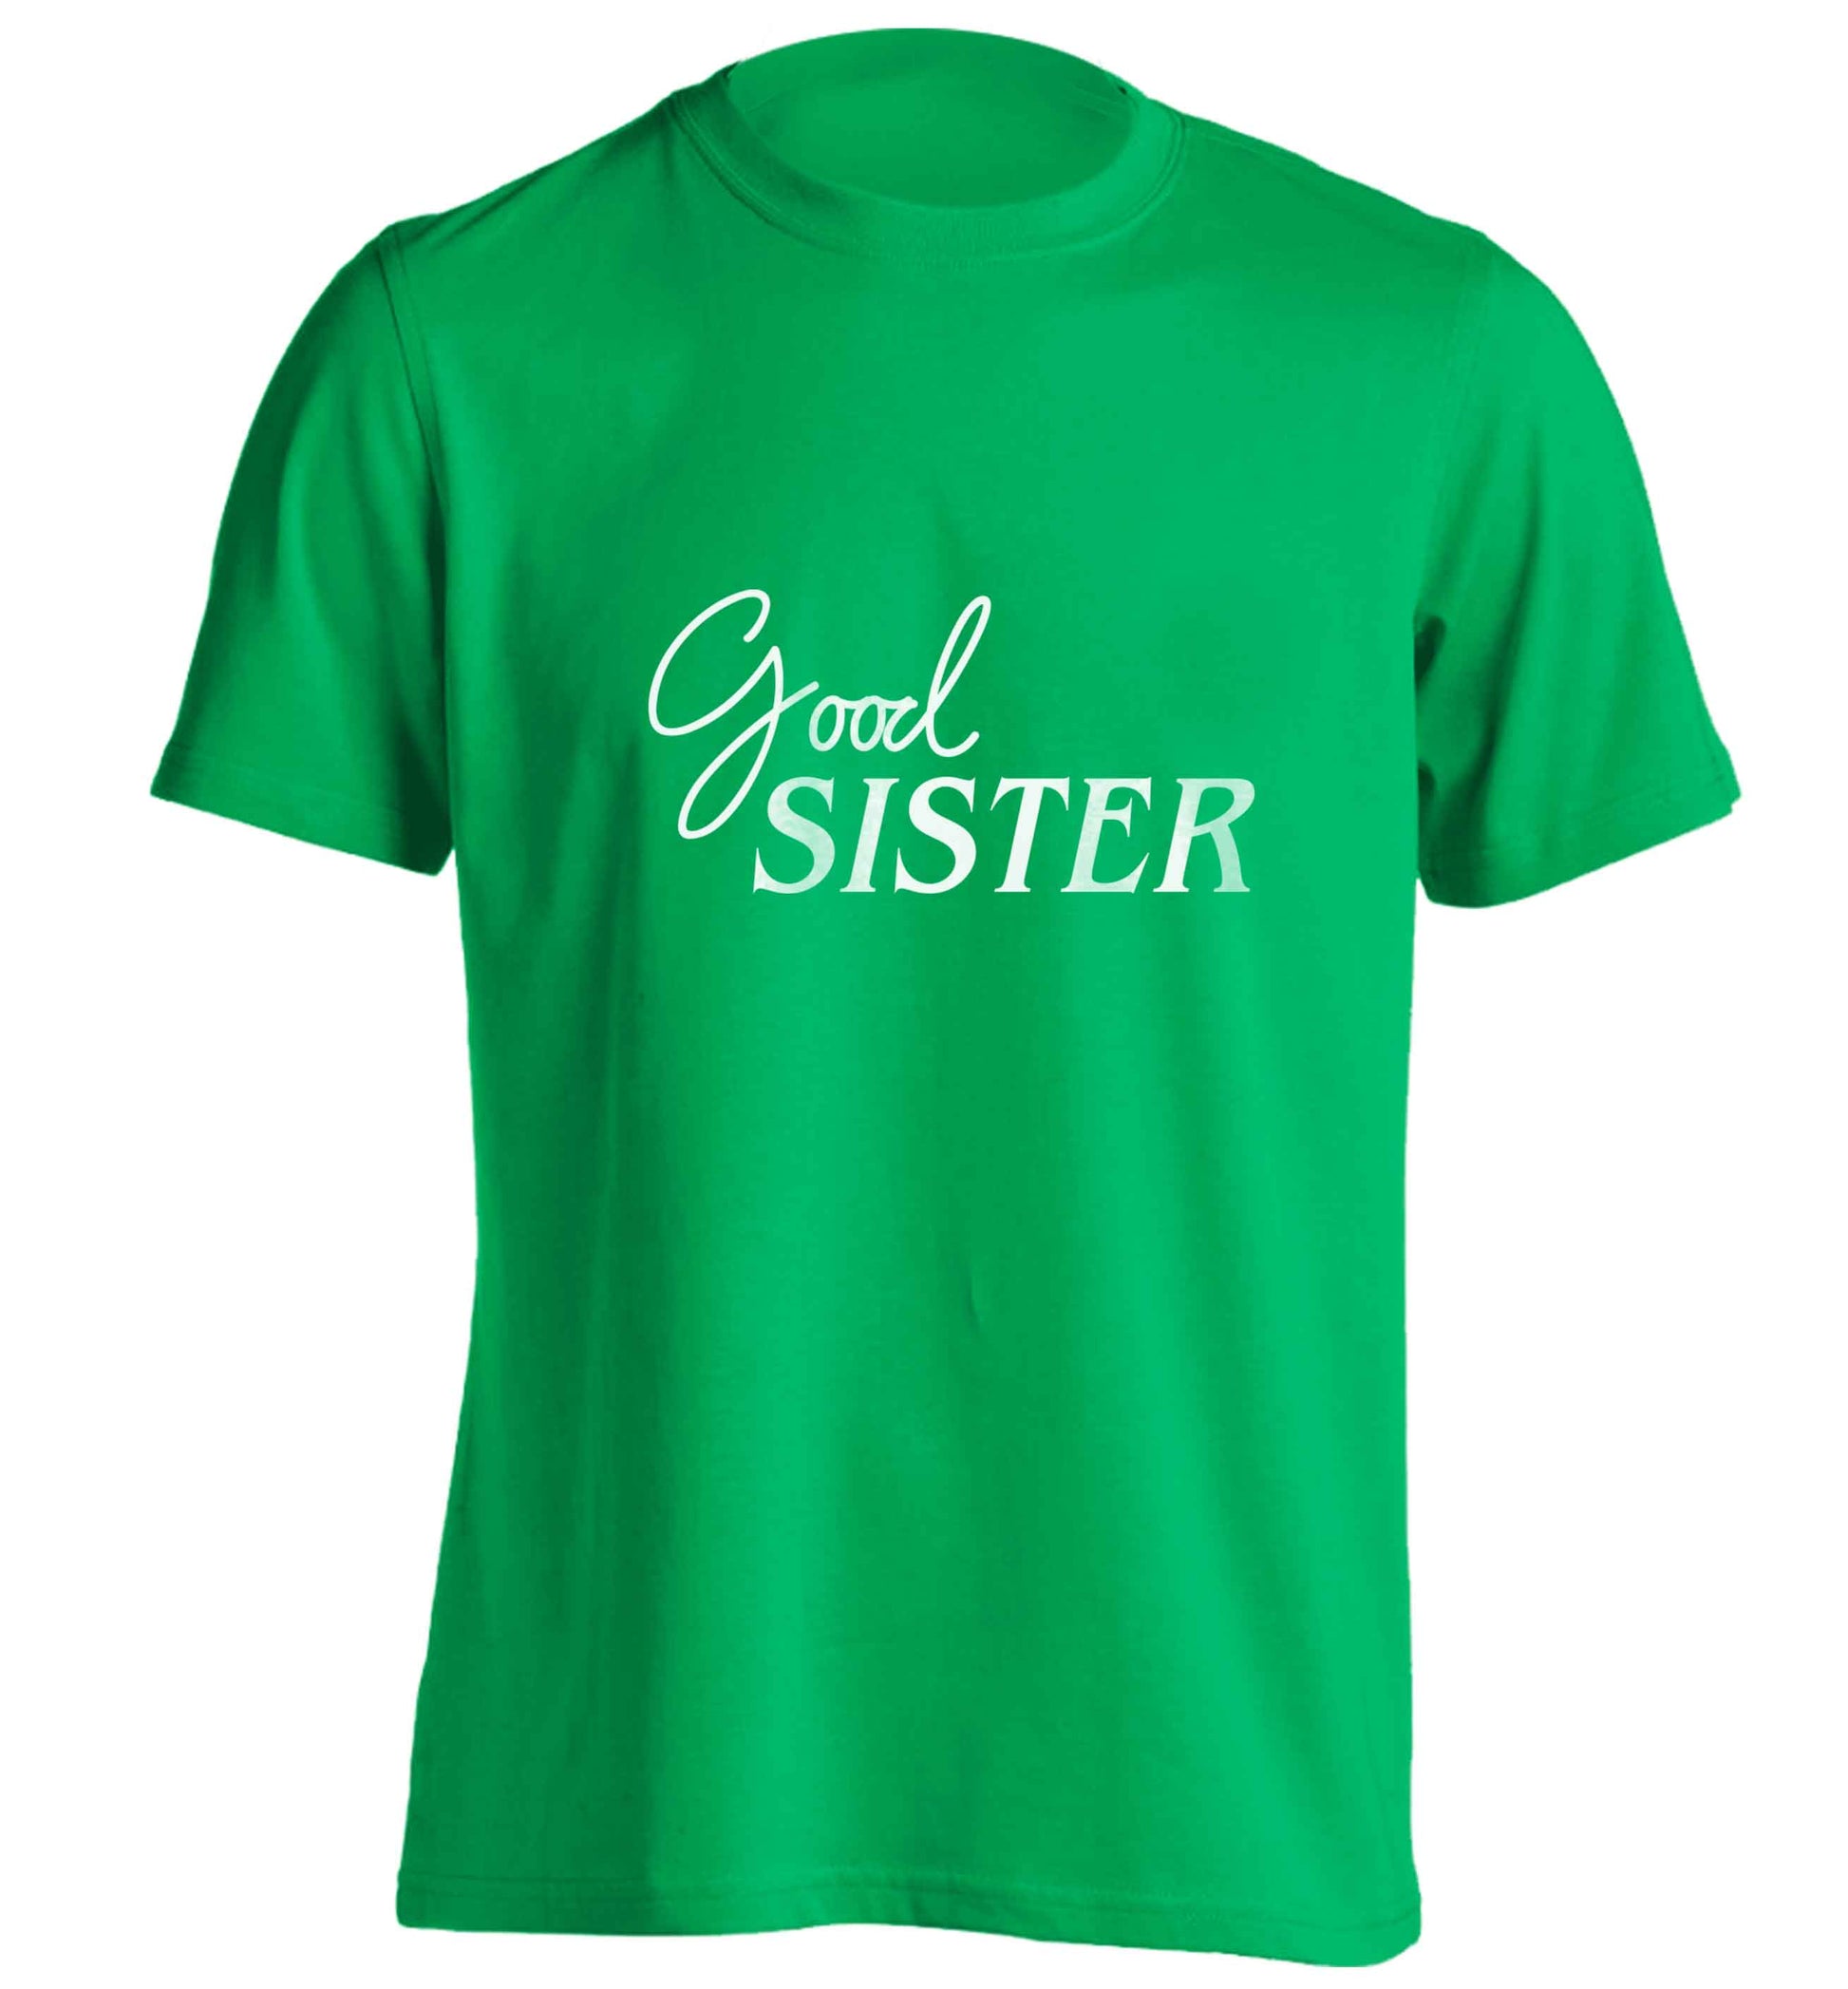 Good sister adults unisex green Tshirt 2XL